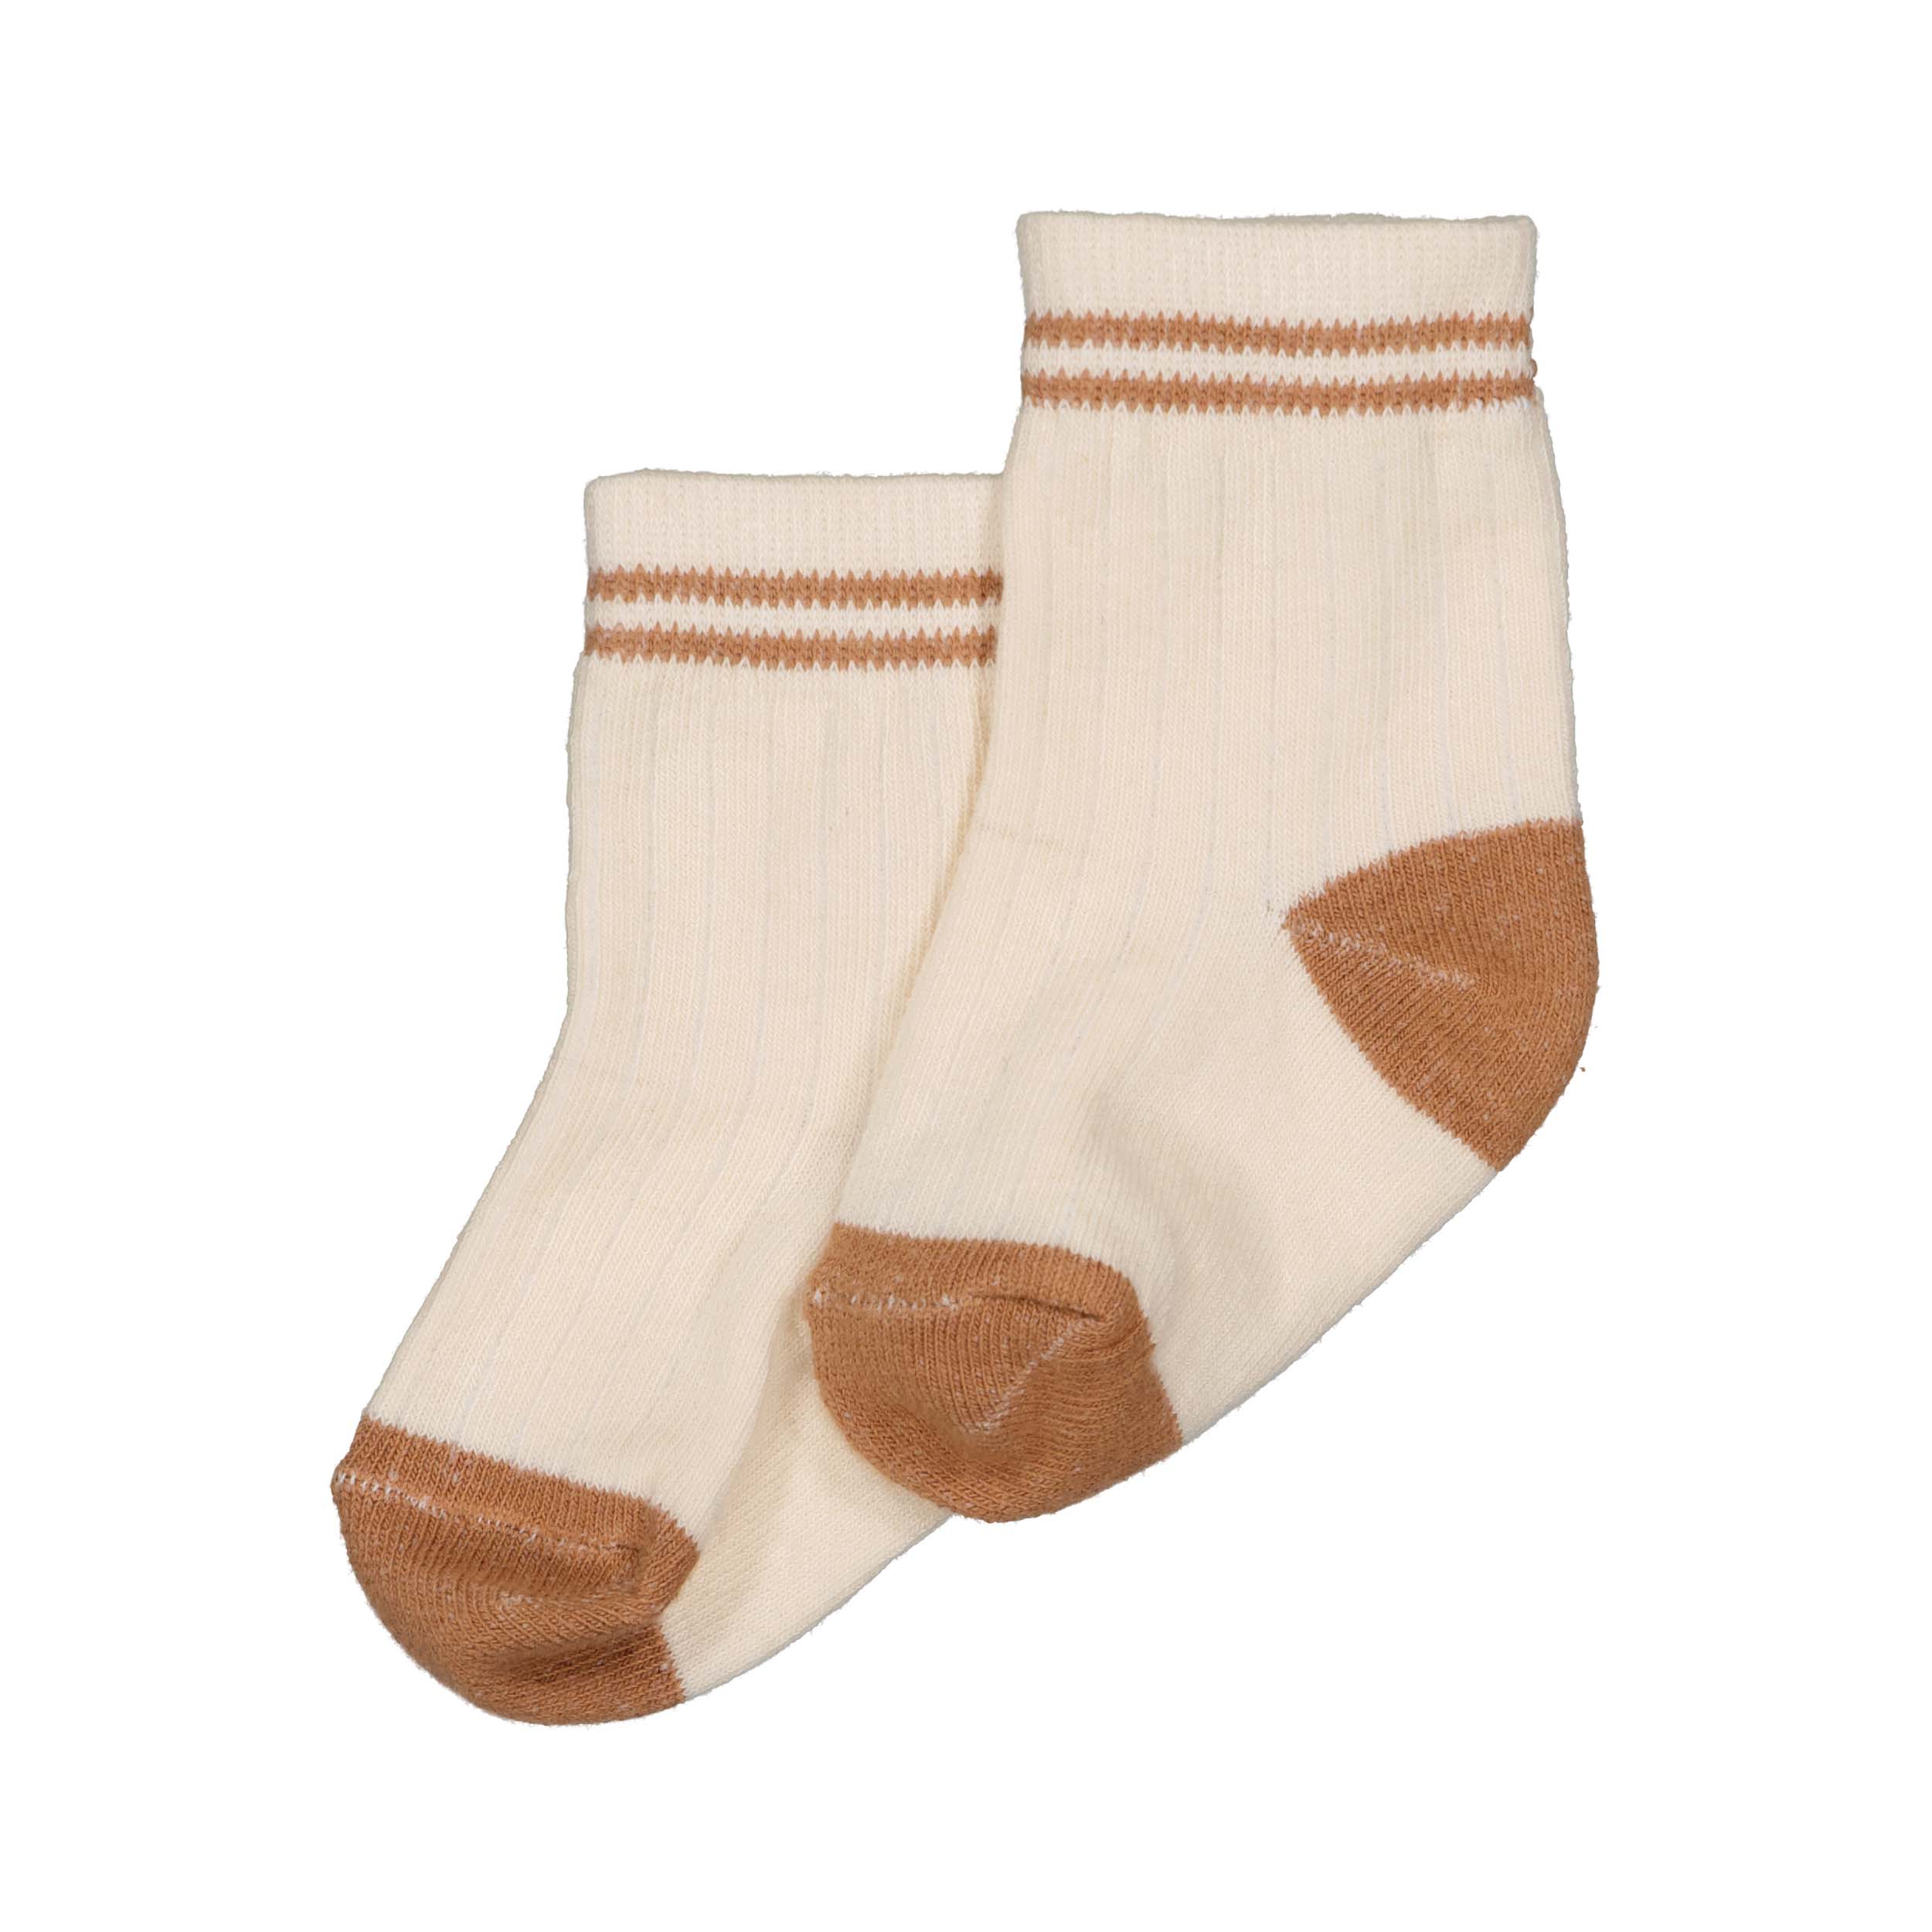 Unisexs Socks CYRIELQNBW23 van  in de kleur Creme in maat ONESIZE.